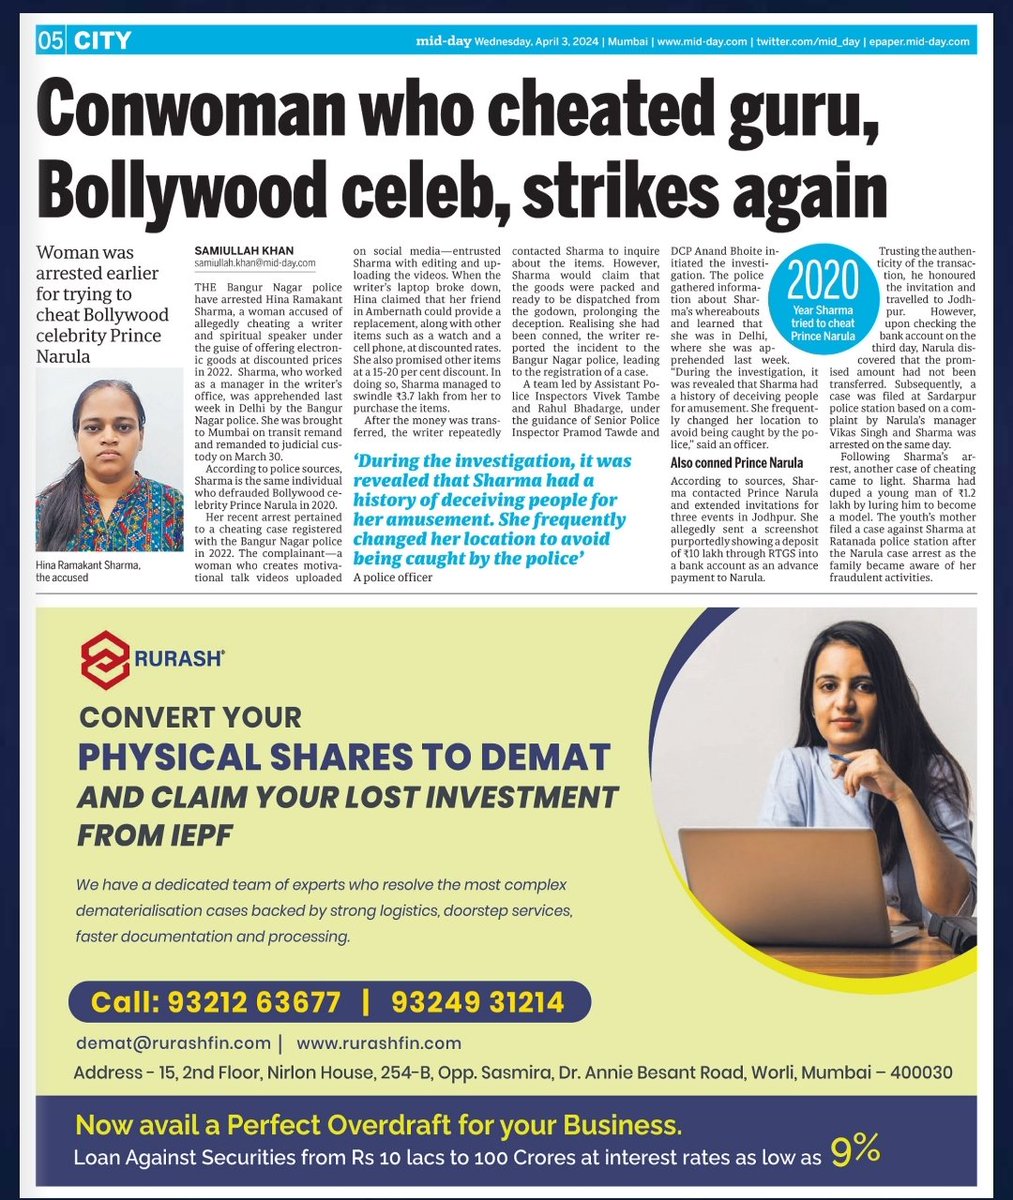 #Mumbai: Conwoman who cheated #guru, #Bollywood celeb, strikes again mid-day.com/mumbai/mumbai-… @AgasheApoorva @DiwakarSharmaa @faisaltandel1 @journofaizan @mid_day @ShirishVaktania @MumbaiNewsRT